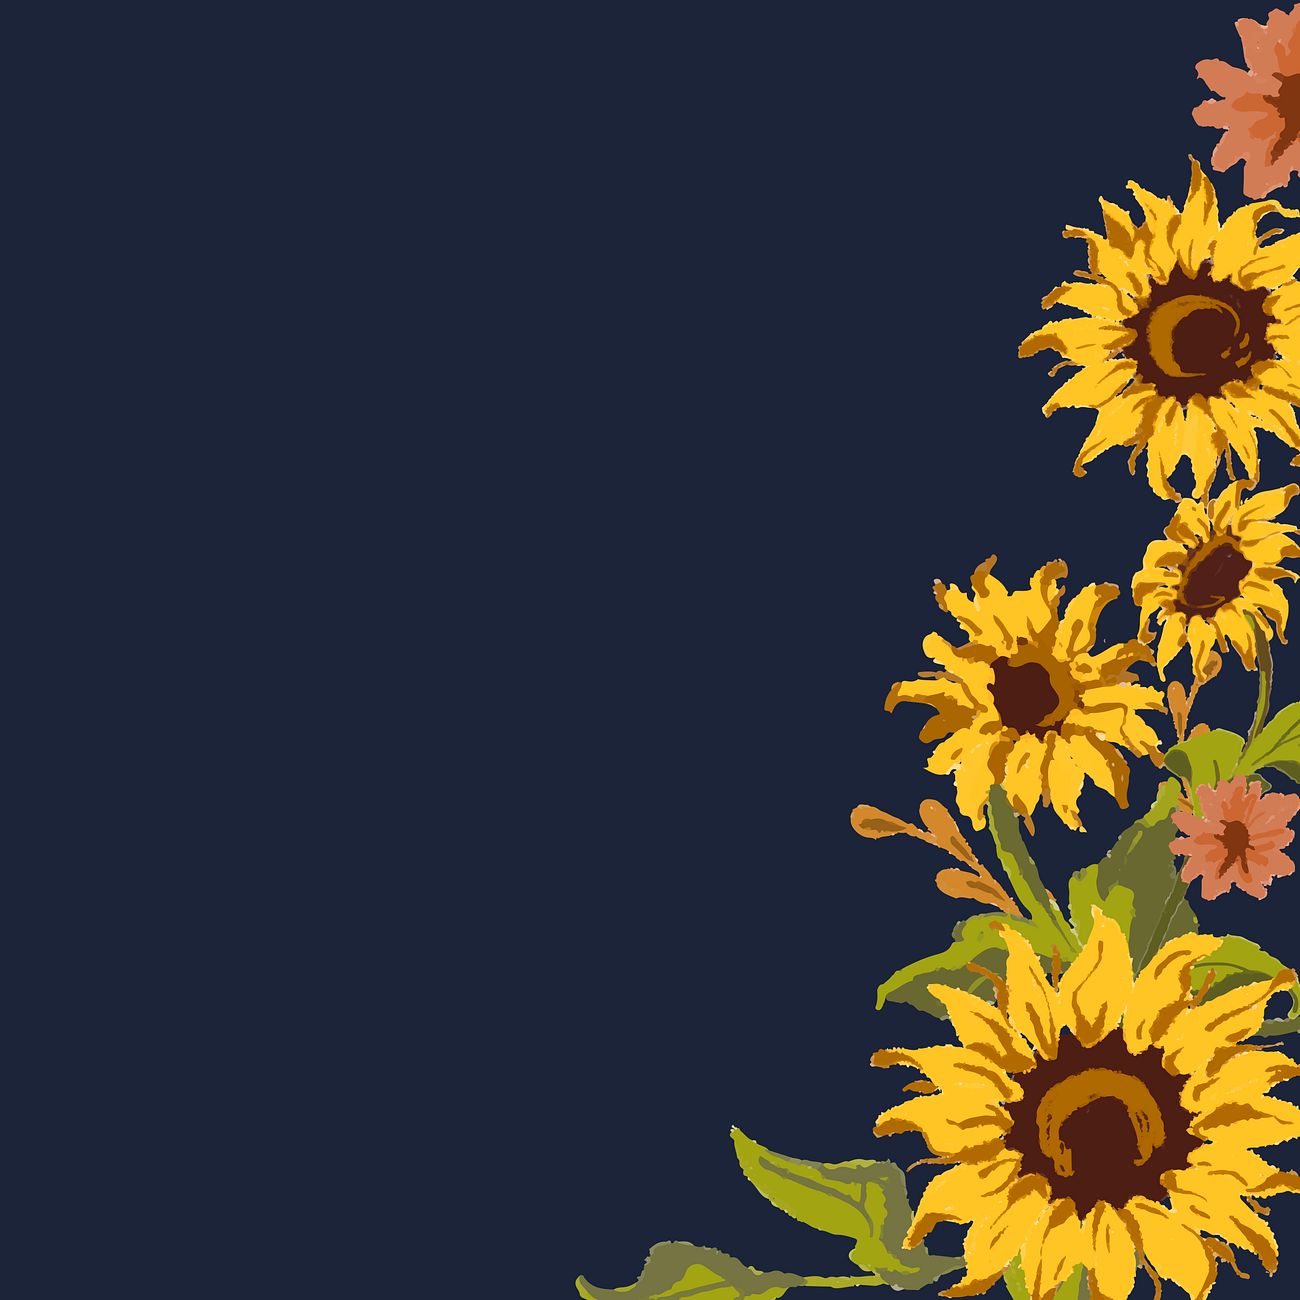 Download Sunflower pattern | Free vector - 558732